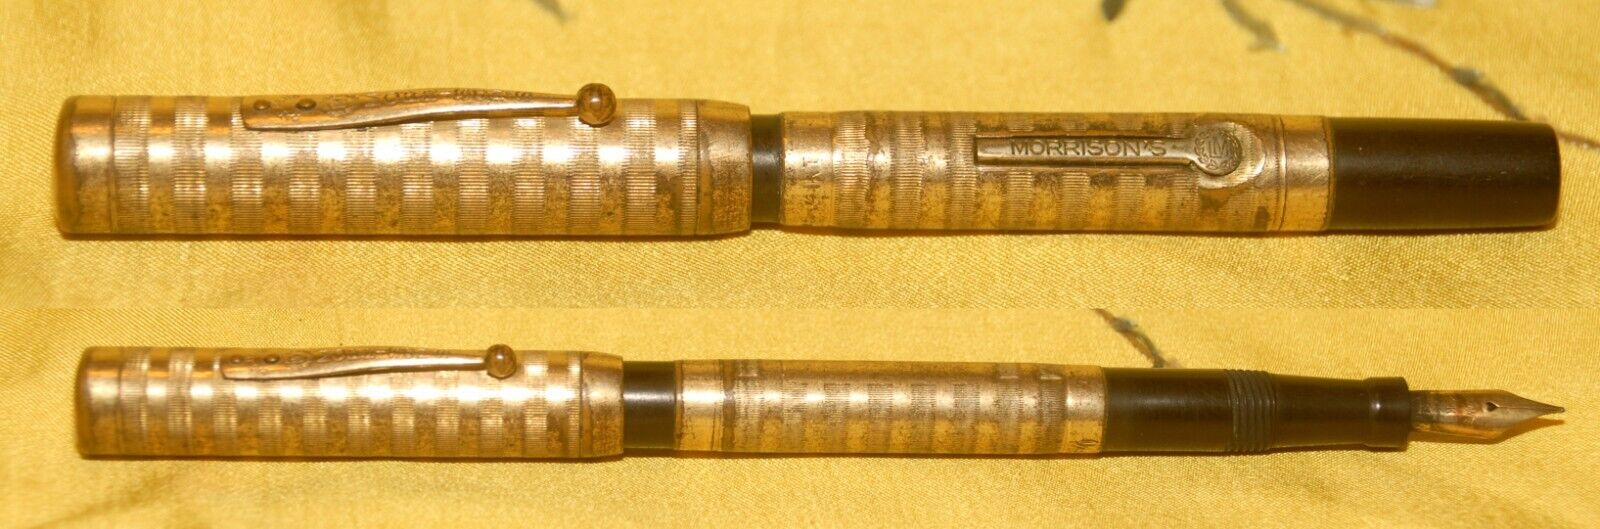 VINTAGE 30S/40S G.F. MORRISON'S Fountain pen & Warranted 14K Gold nib